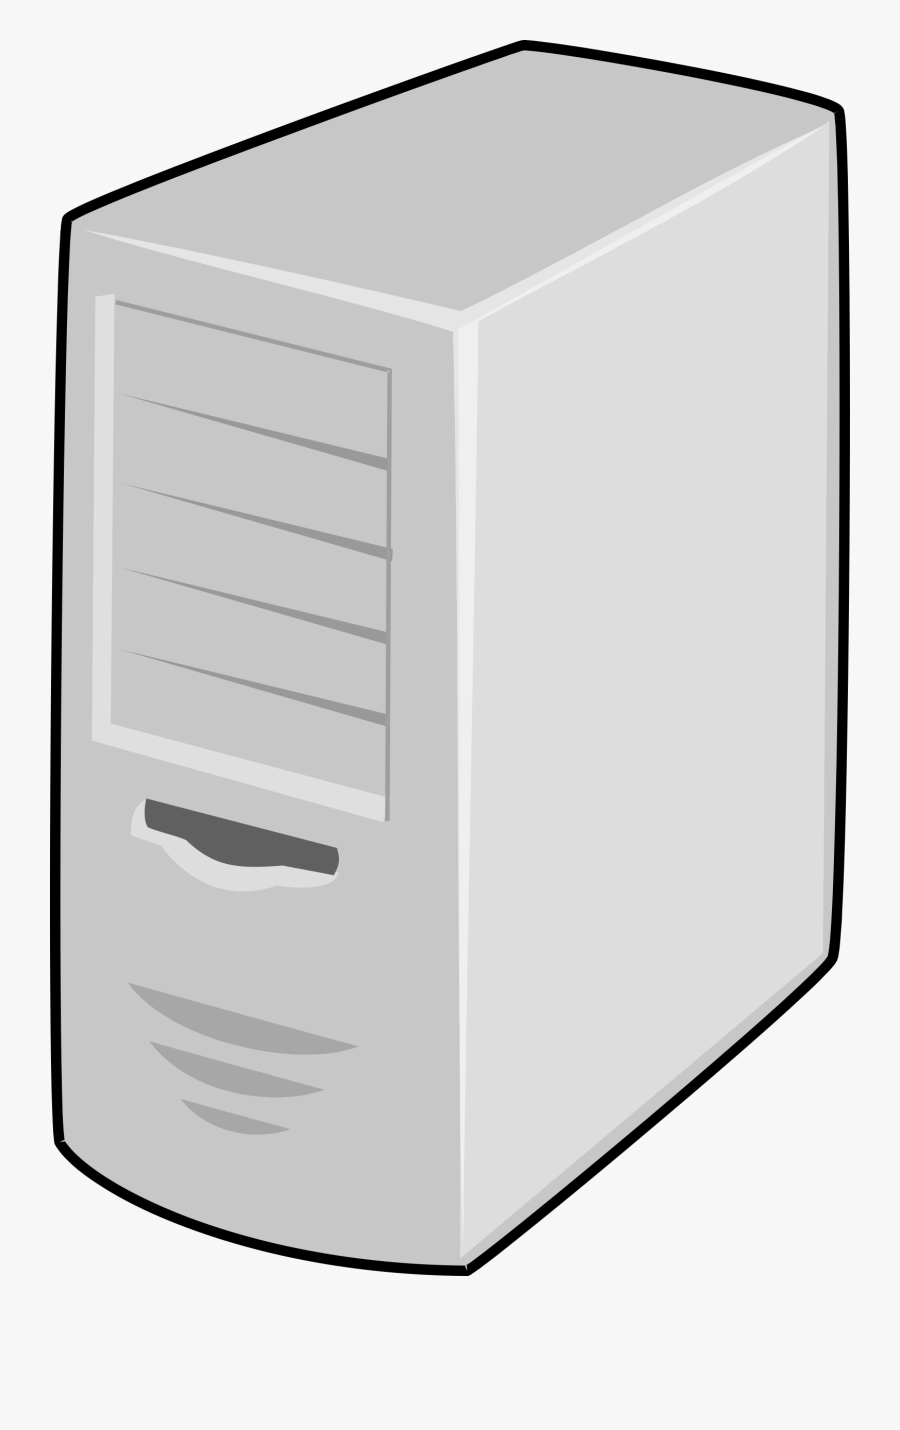 Server Png, Transparent Clipart